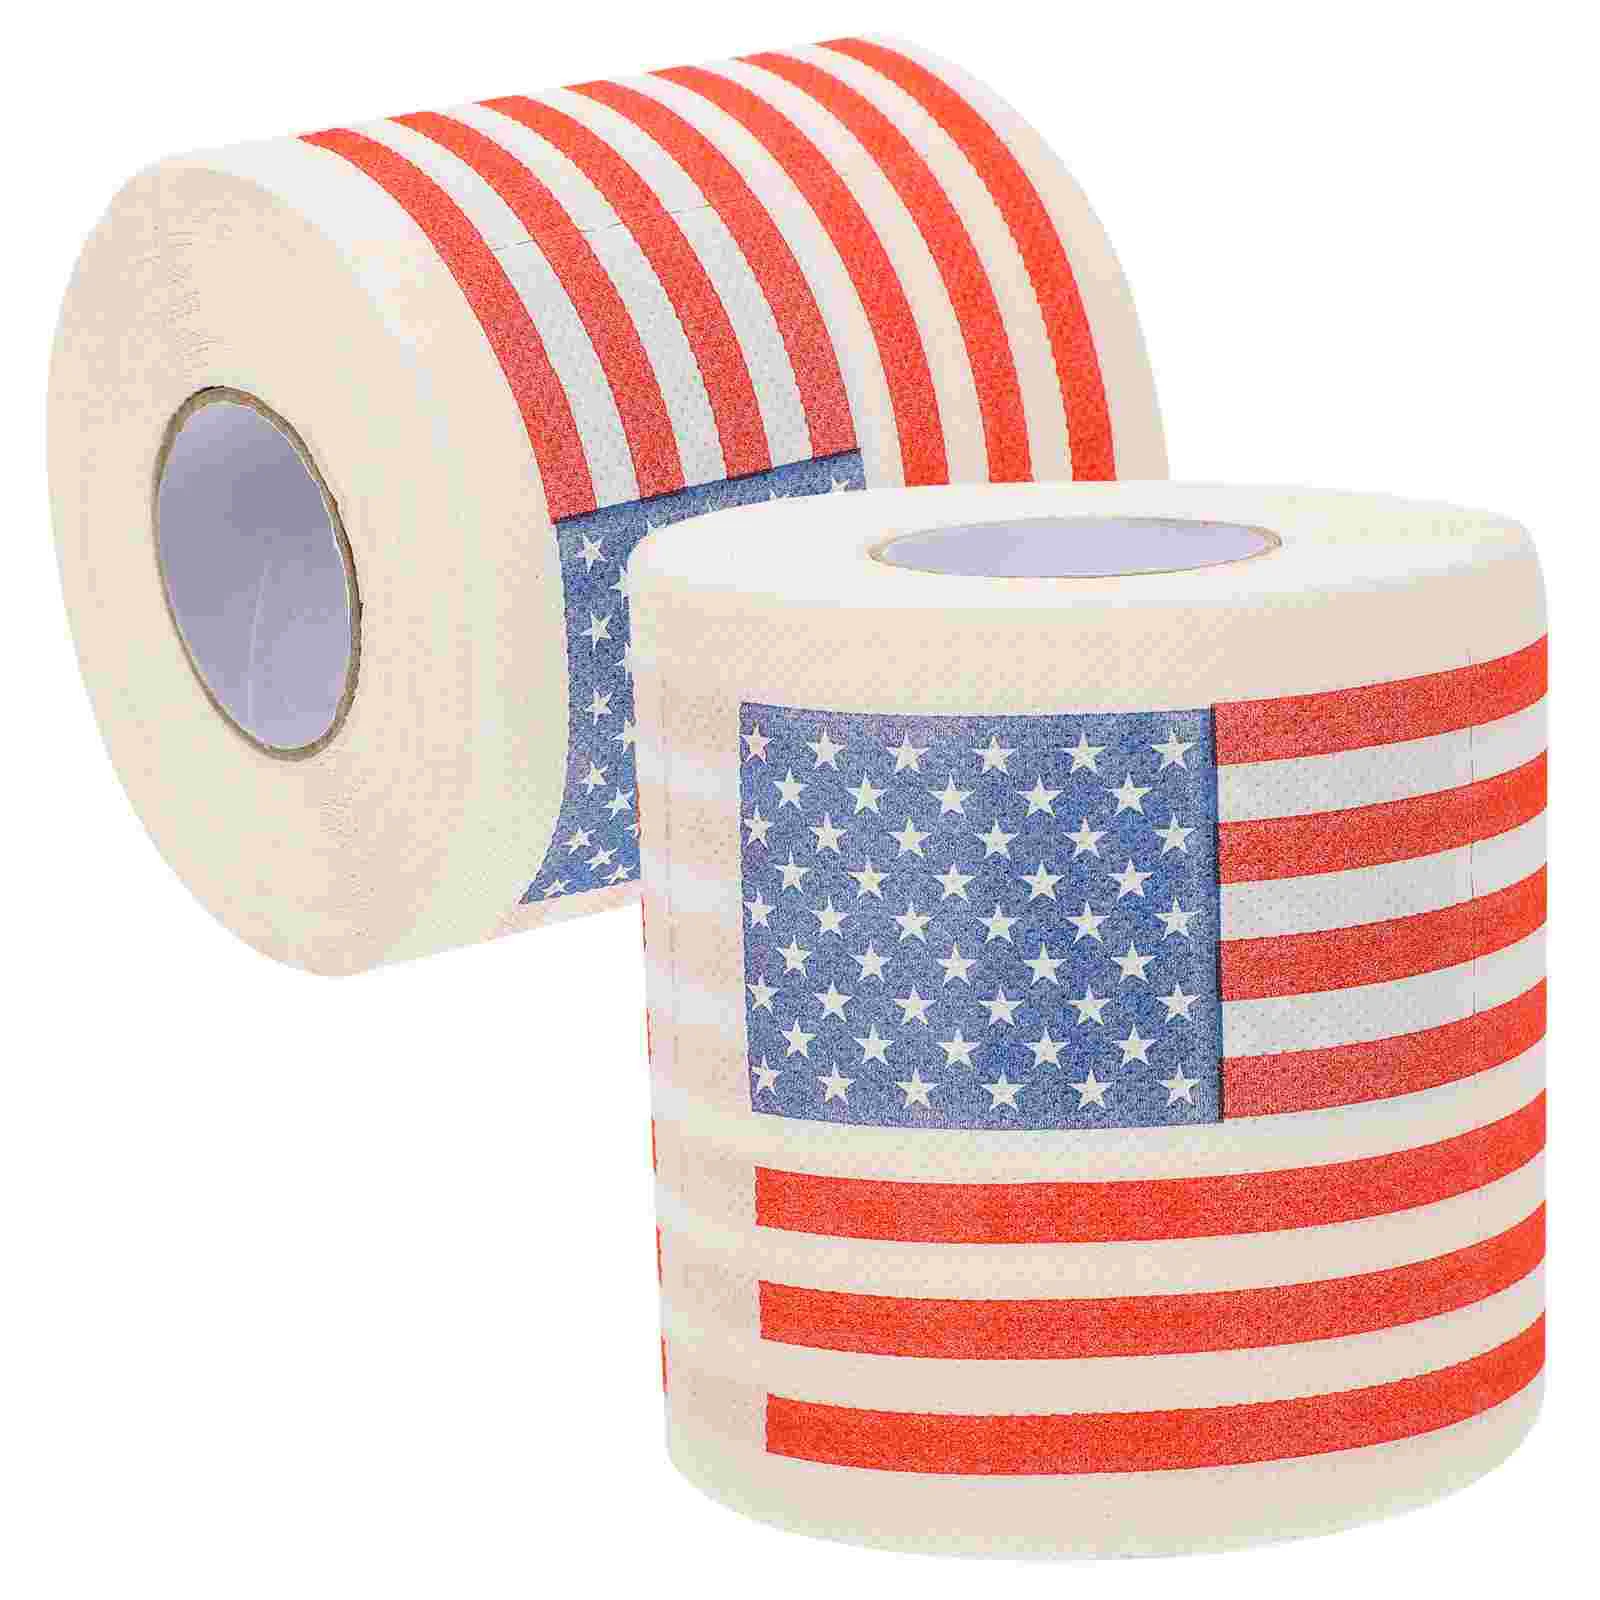 

2 рулона бумаги с американским флагом, флаги США, бумажная салфетка, гигиеническая салфетка, туалетная бумага из целлюлозы, туалетная бумага...